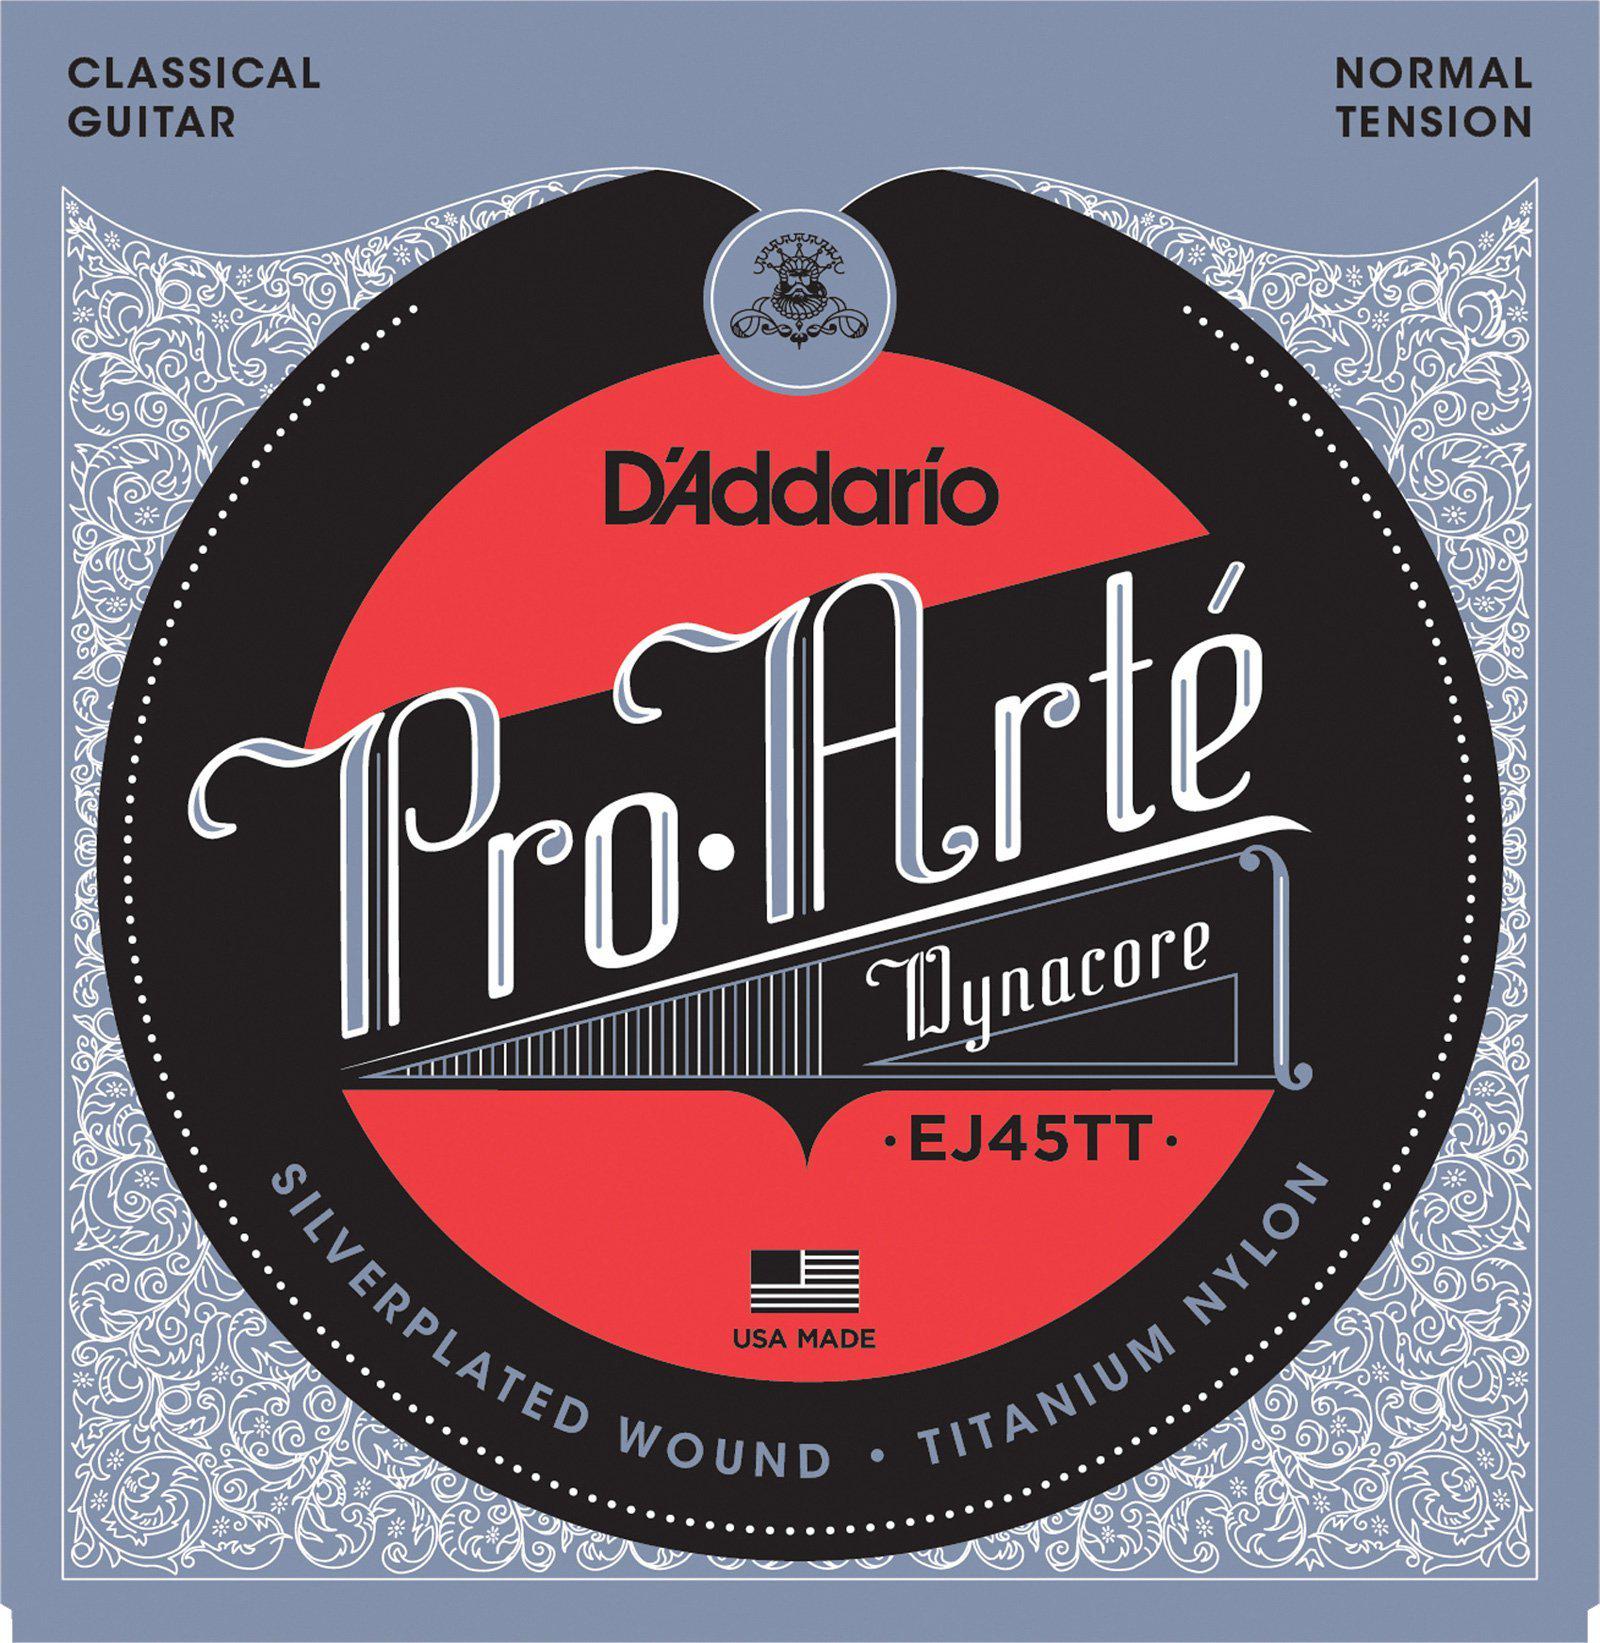 D'Addario EJ45TT Pro Arte Dynacore Normal Tension Classical Guitar Strings